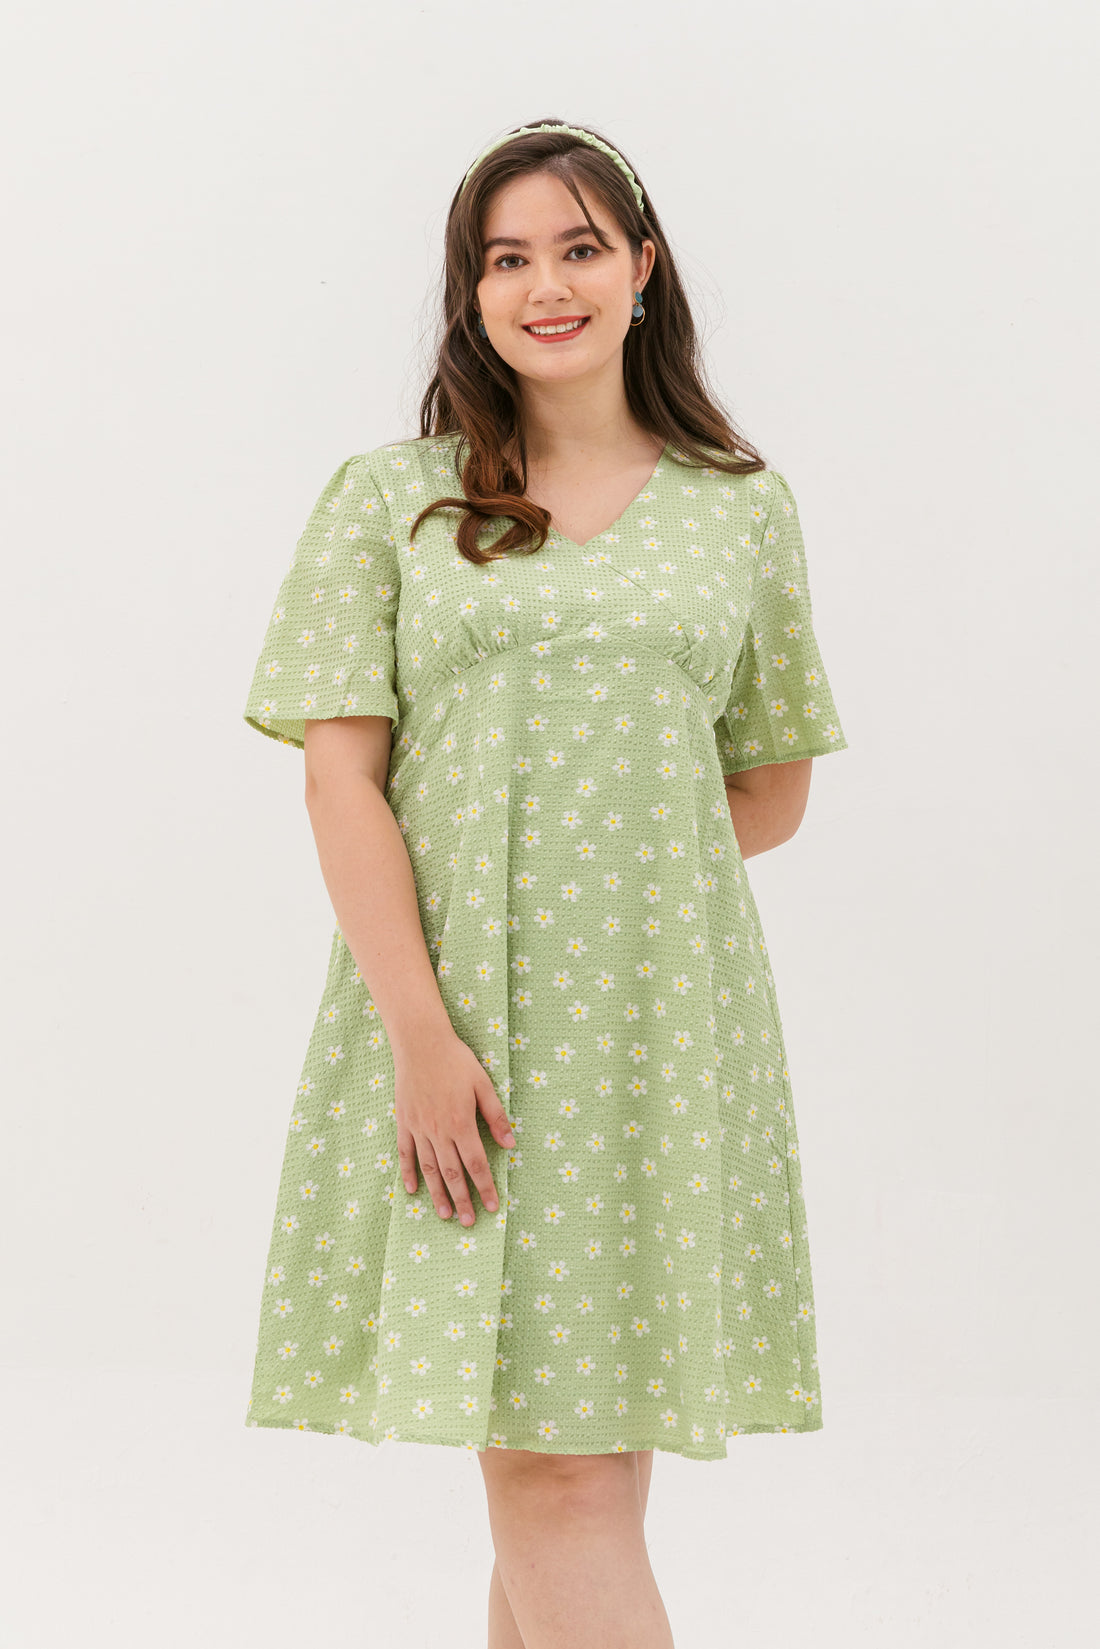 Cherie Textured Dress In Tea Green Daisy